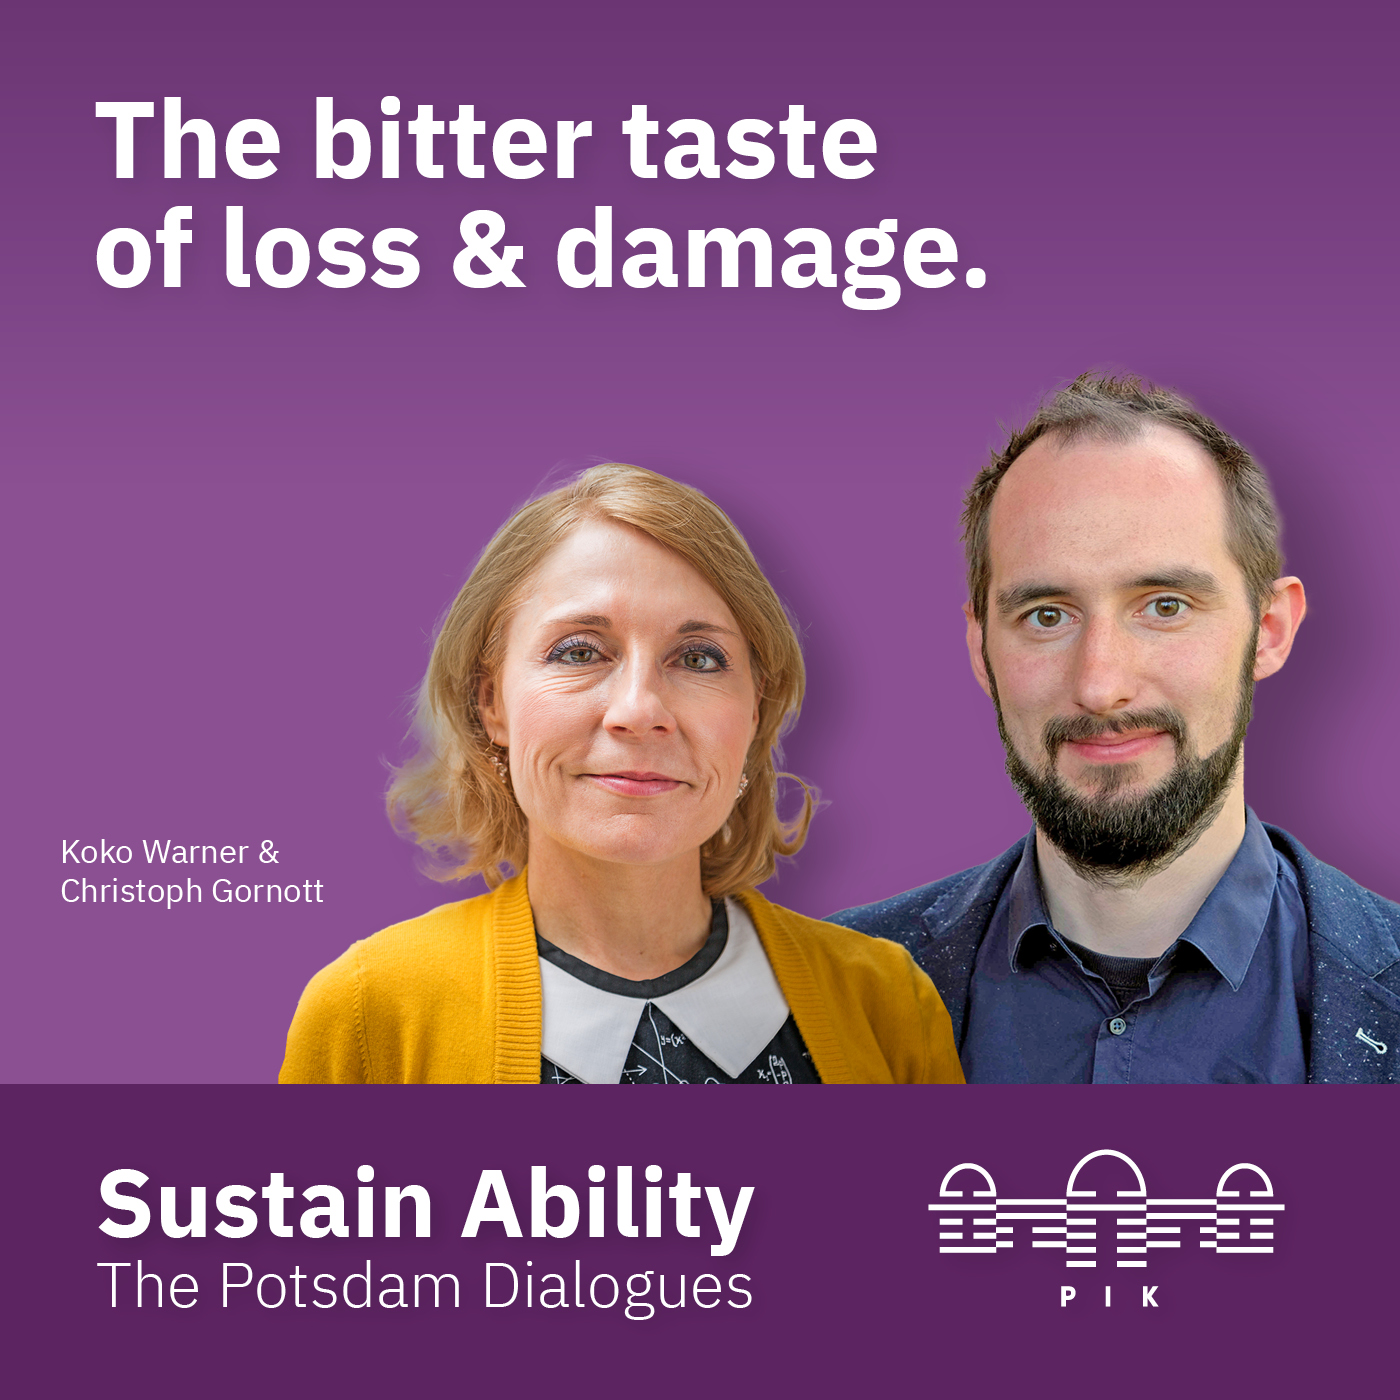 New PIK Podcast: The bitter taste of loss & damage